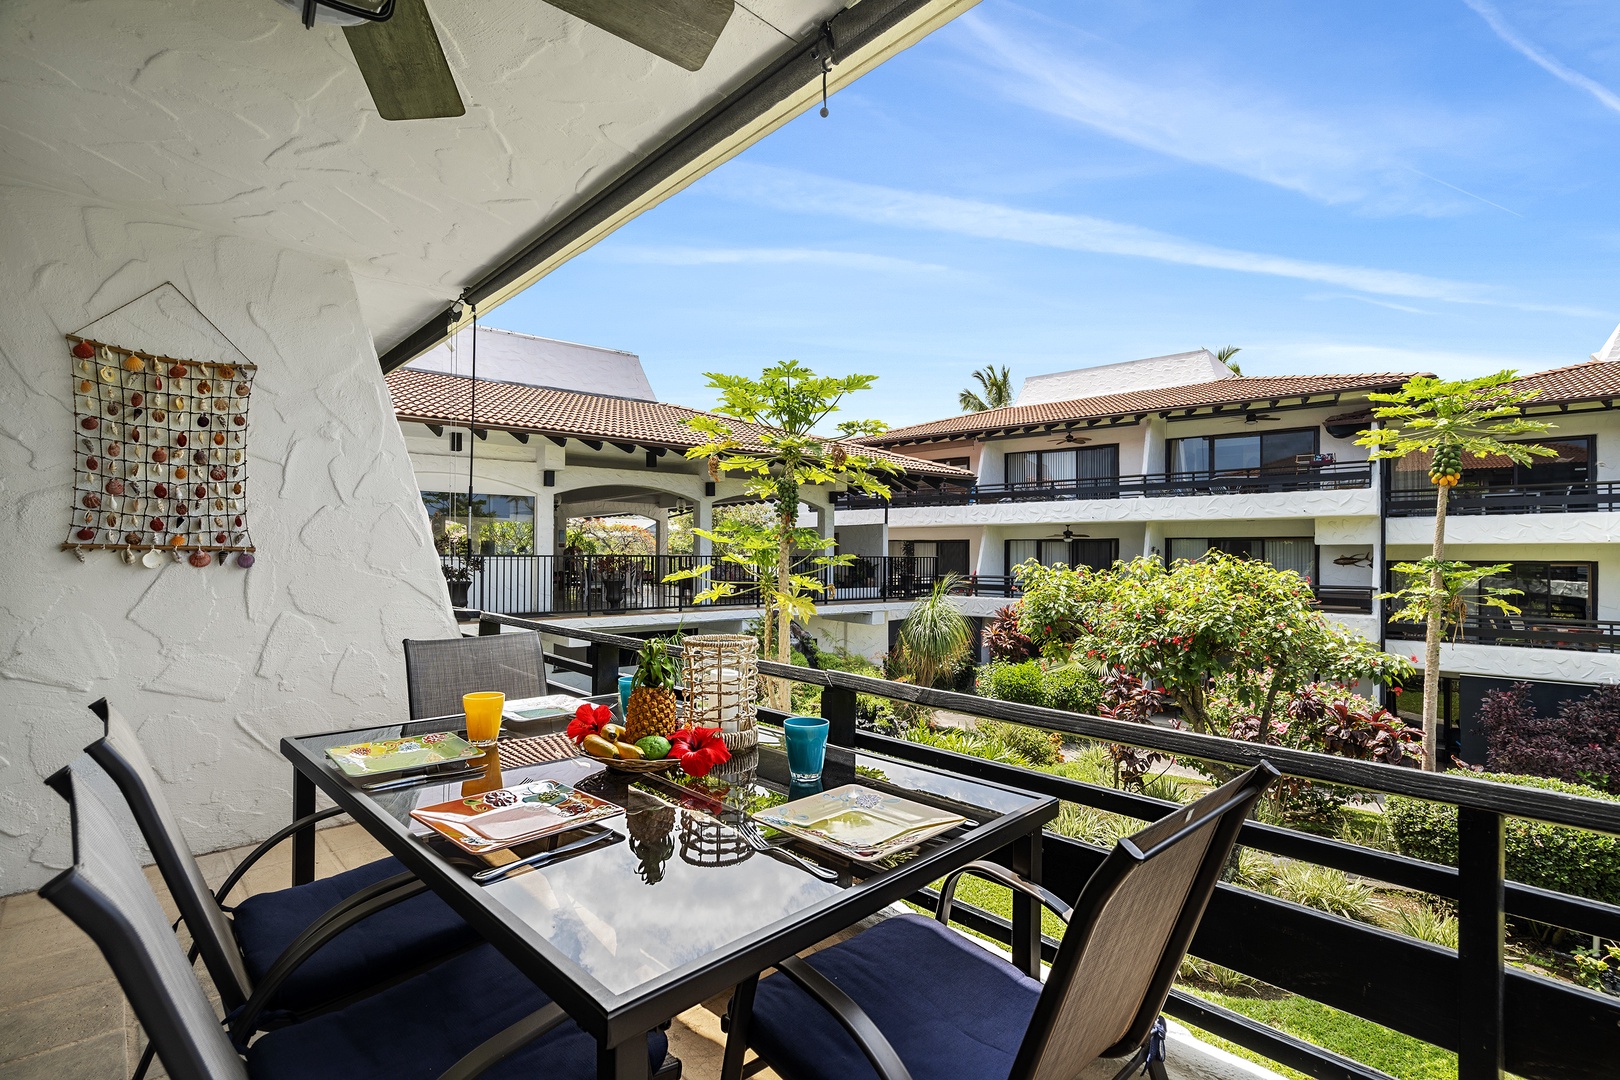 Kailua Kona Vacation Rentals, Casa De Emdeko 222 - Outdoor Dining for 4!